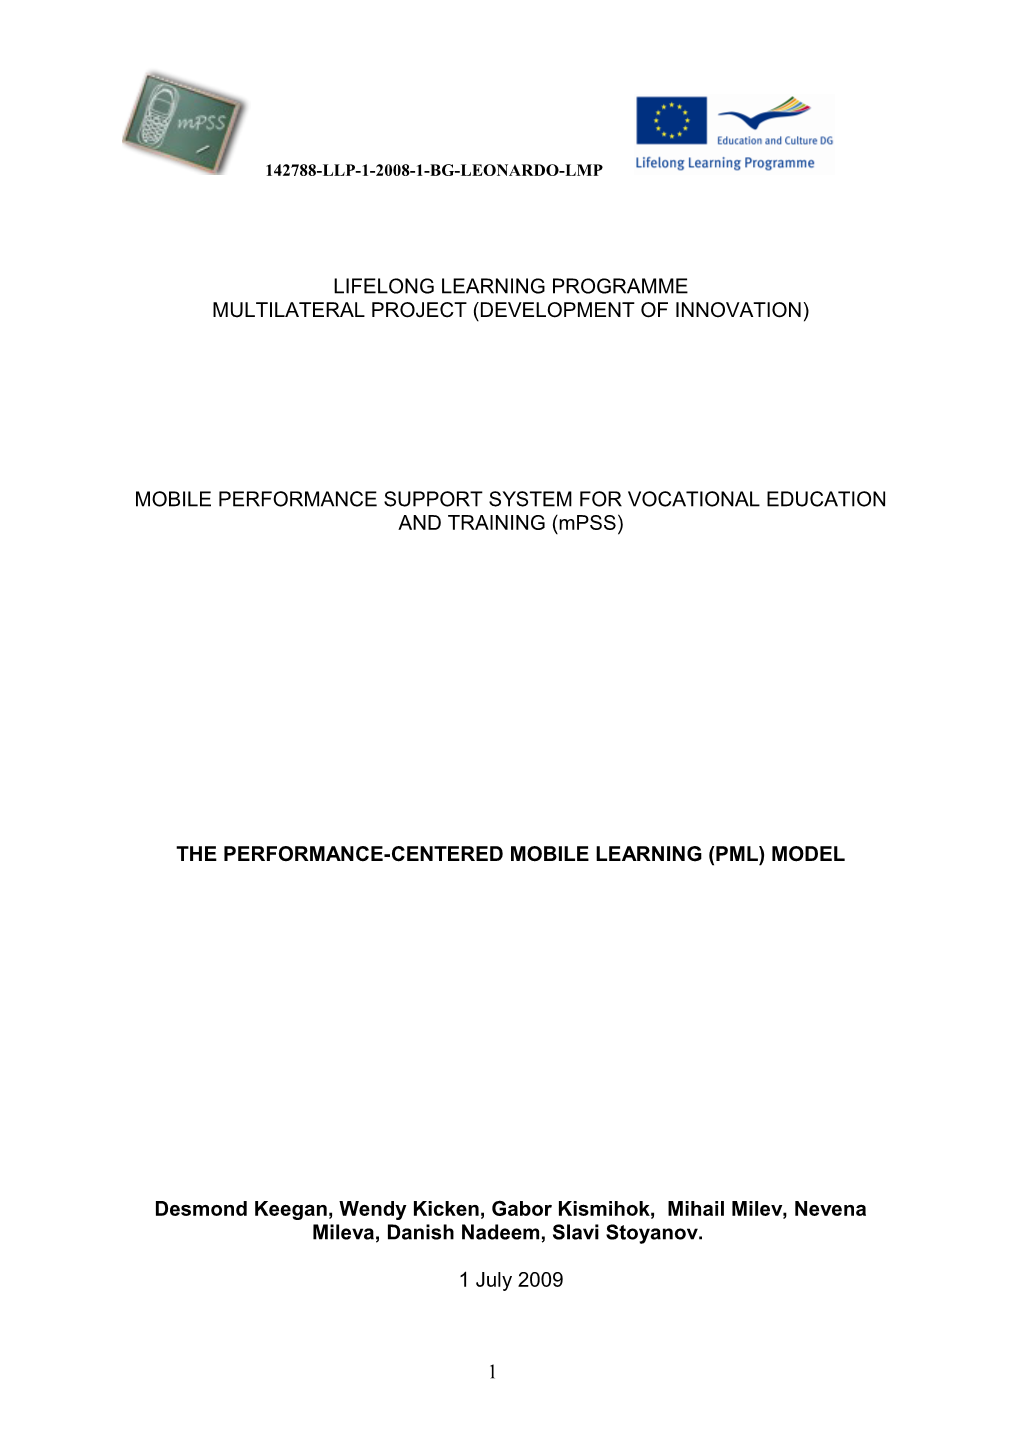 The Performance-Centered Mobile Learning (Pml) Model